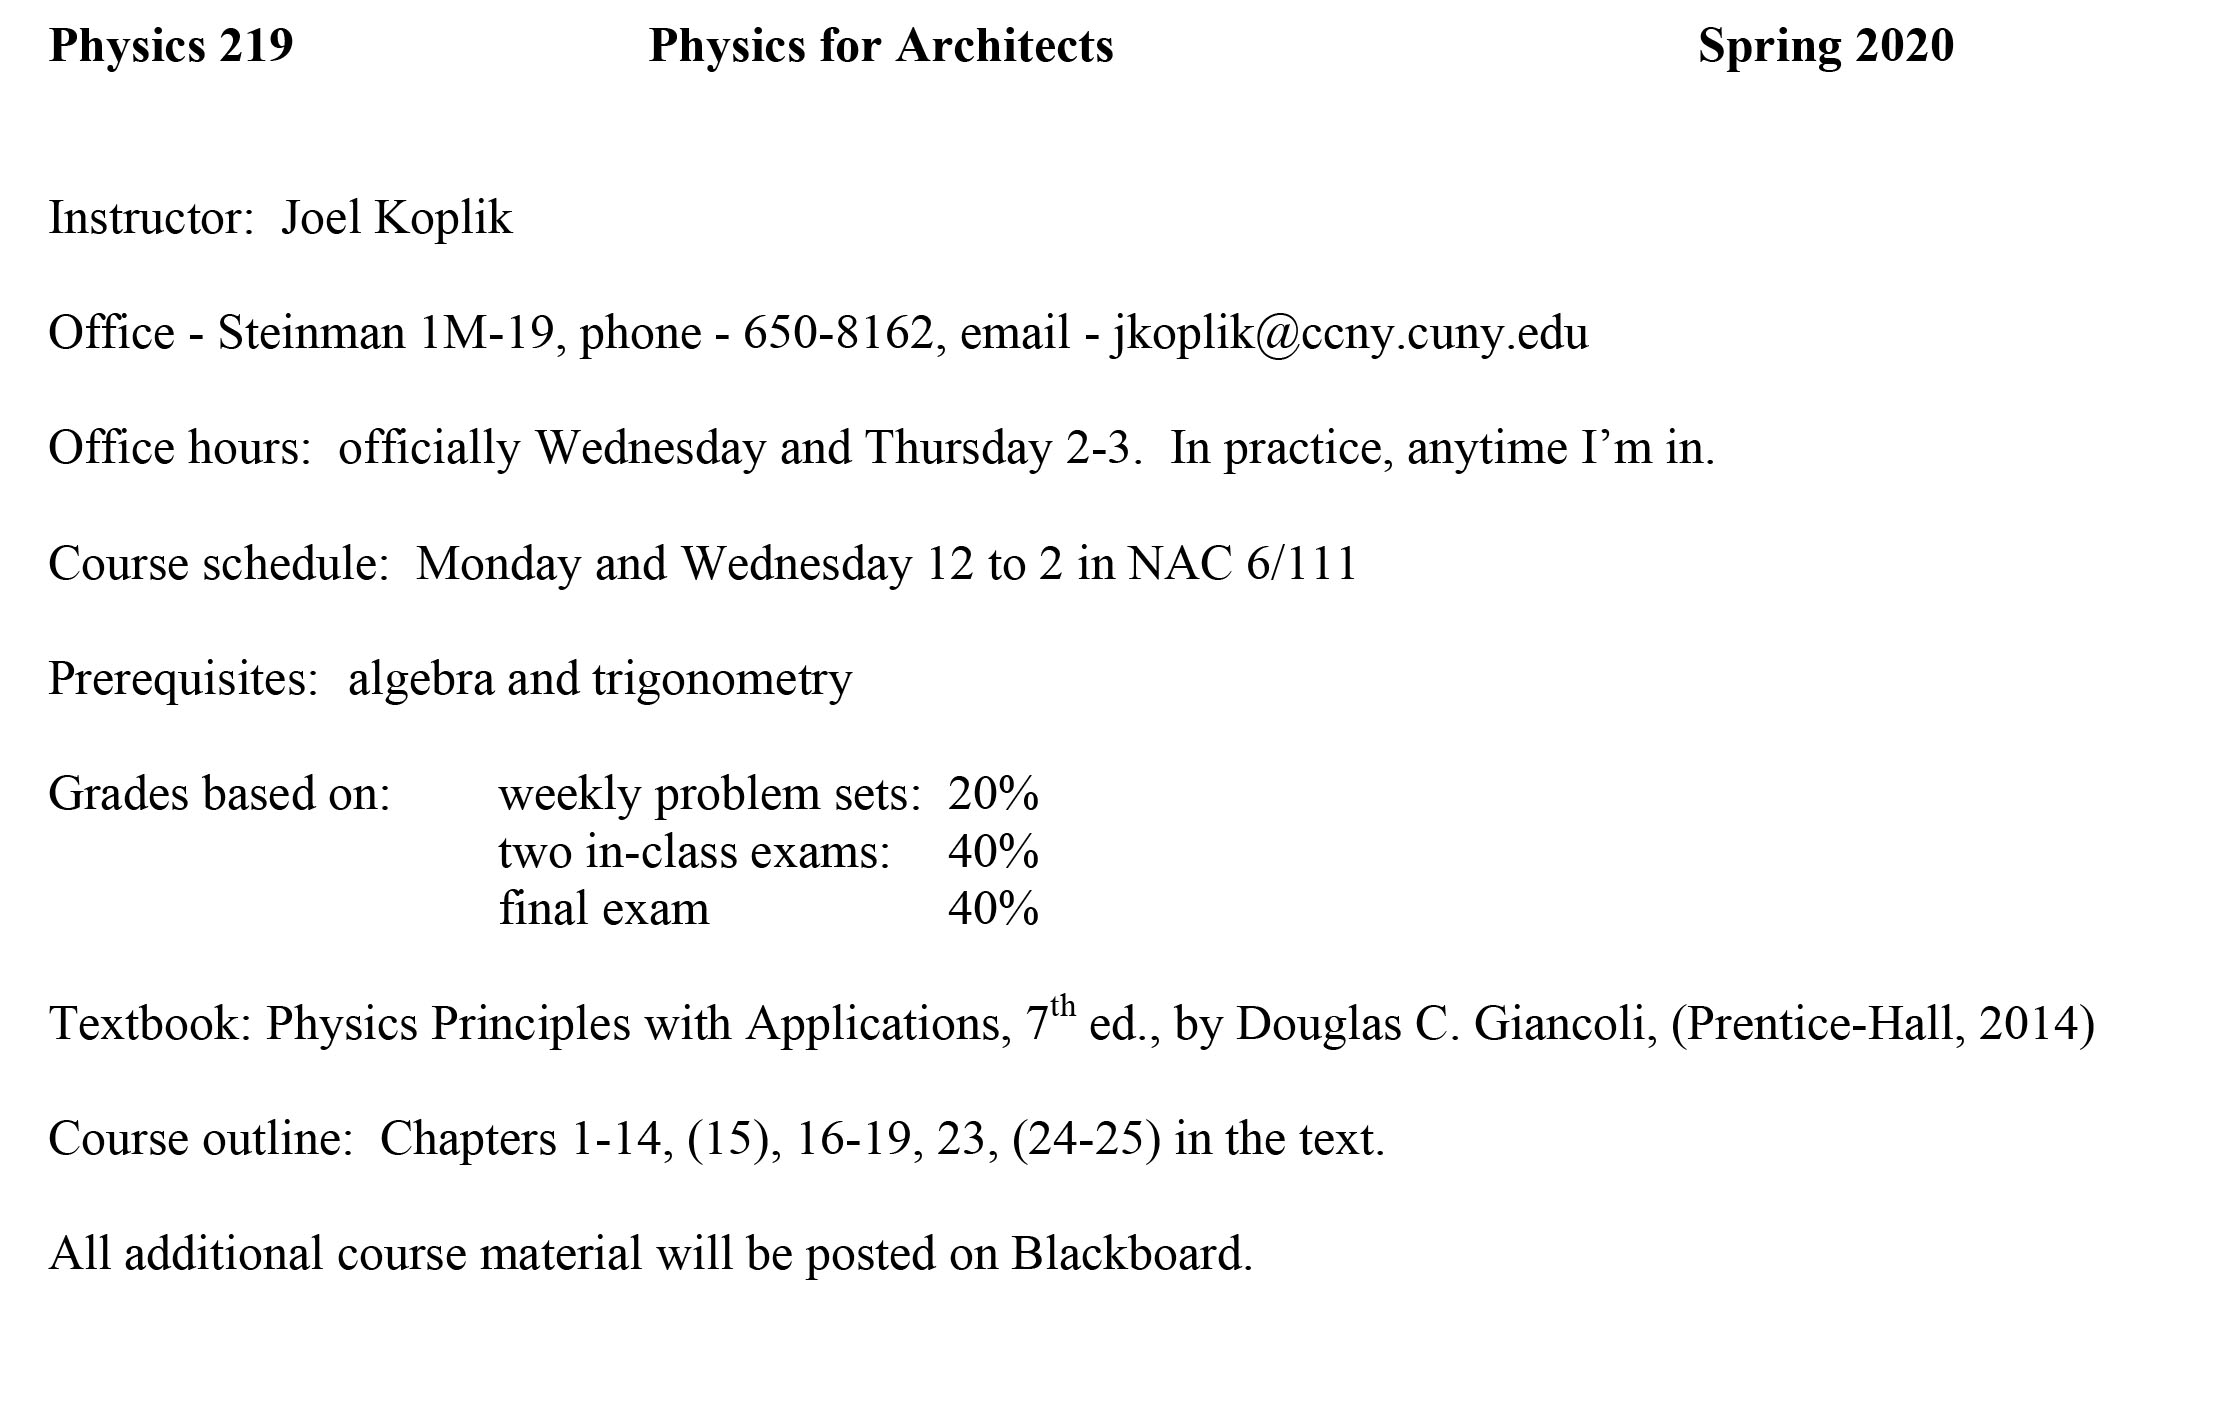 Spring 2020 Syllabus Physics 21900